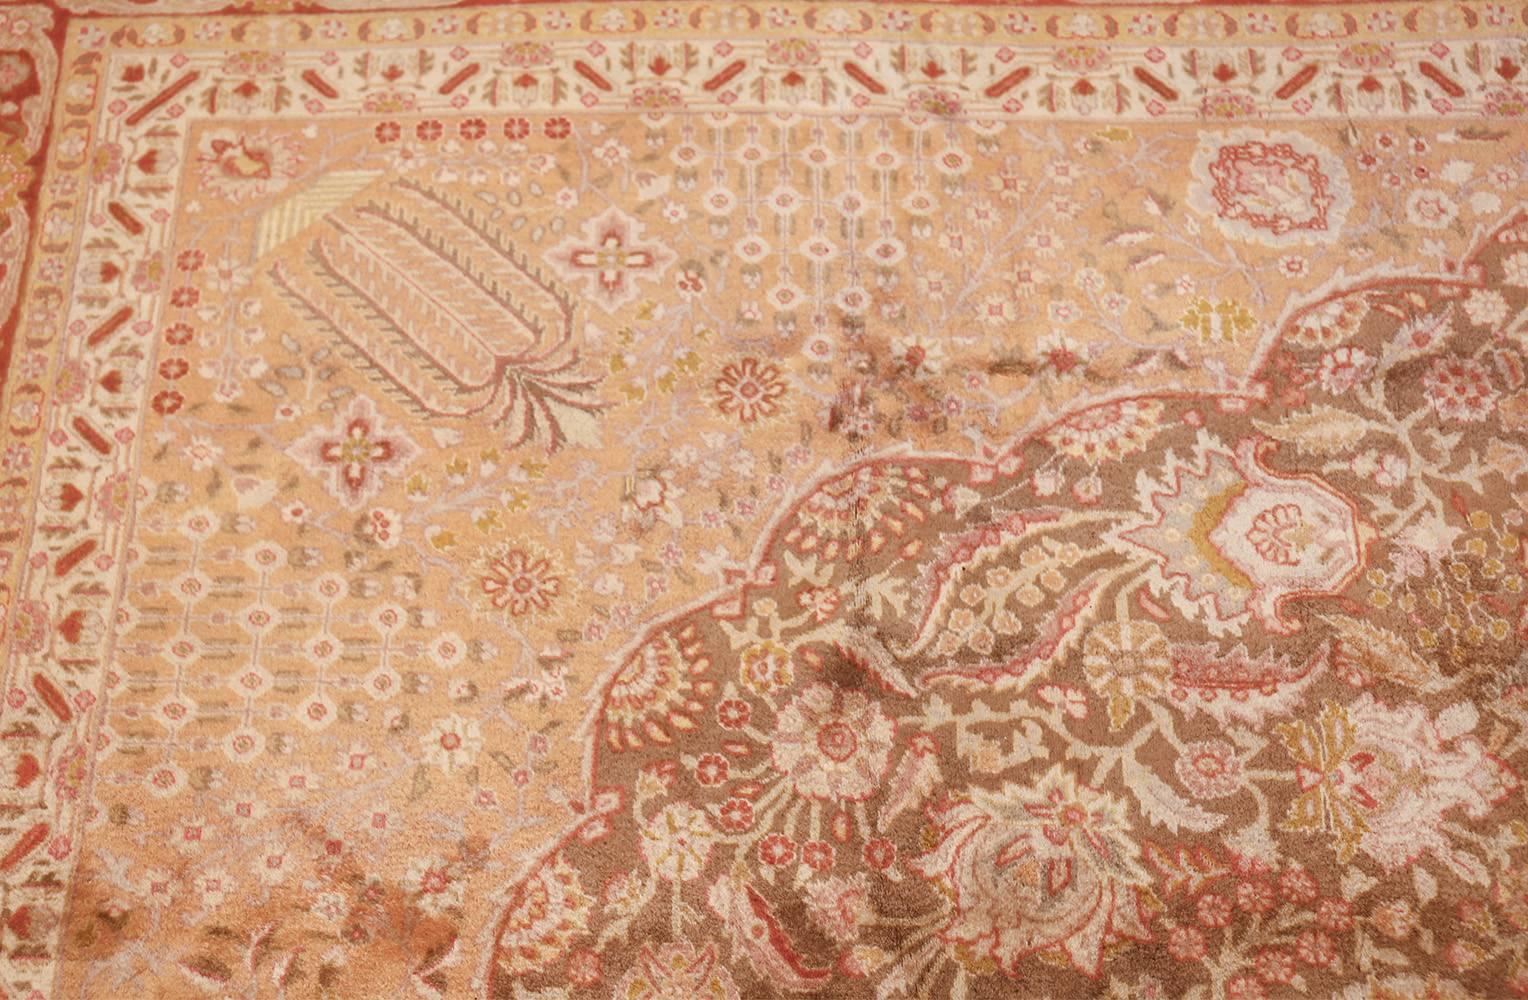 Vintage Room Sized Persian Tabriz Carpet. Size: 9 ft 9 in x 13 ft 6